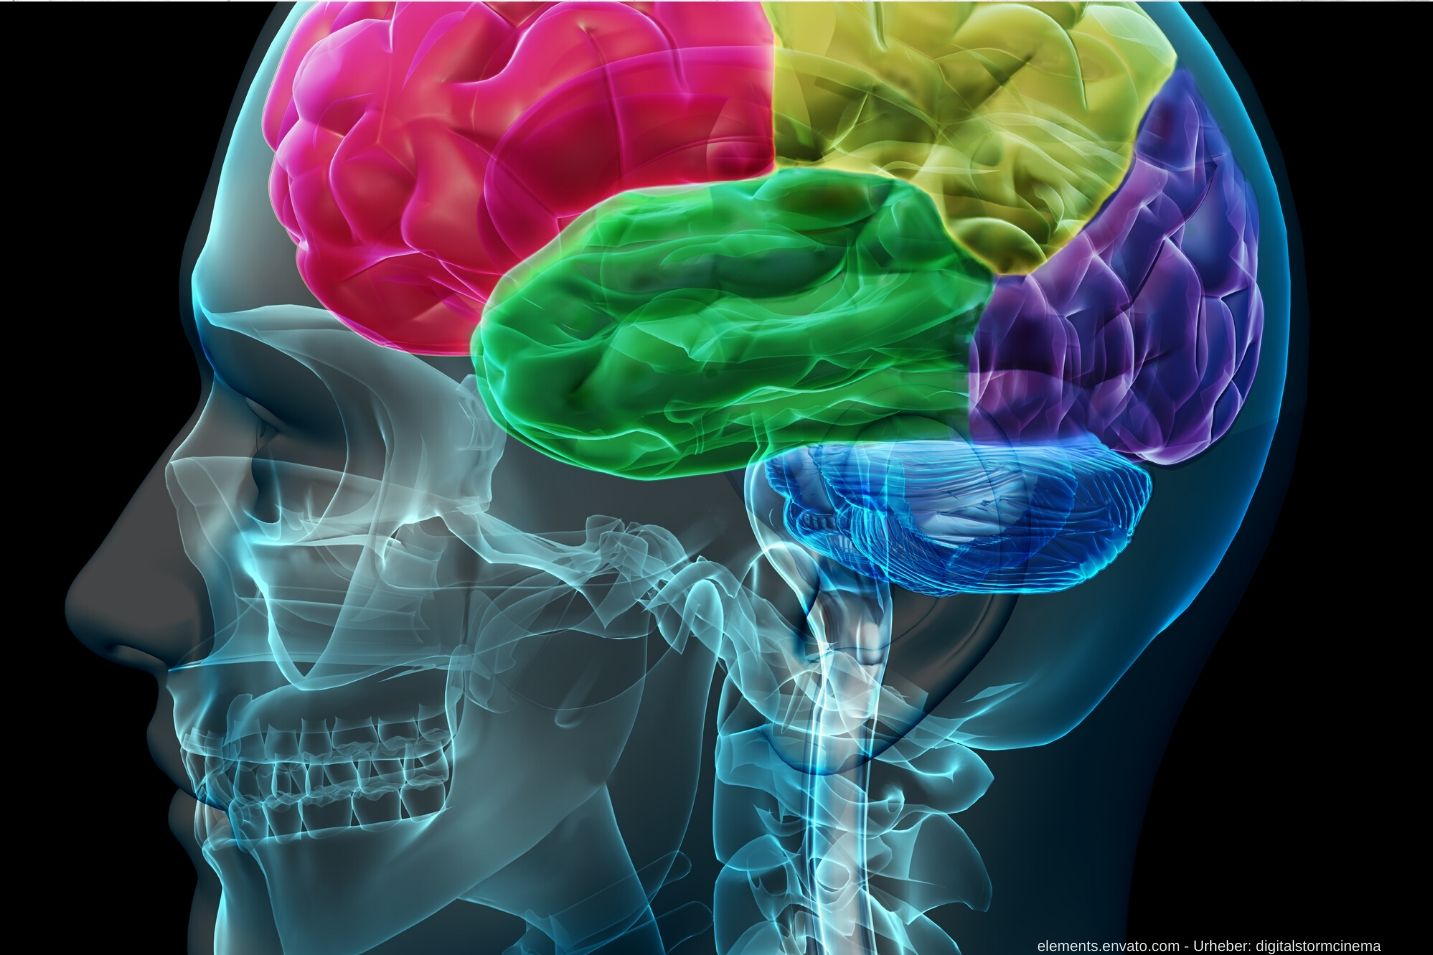 Neuration seriöses Gehirntraining?